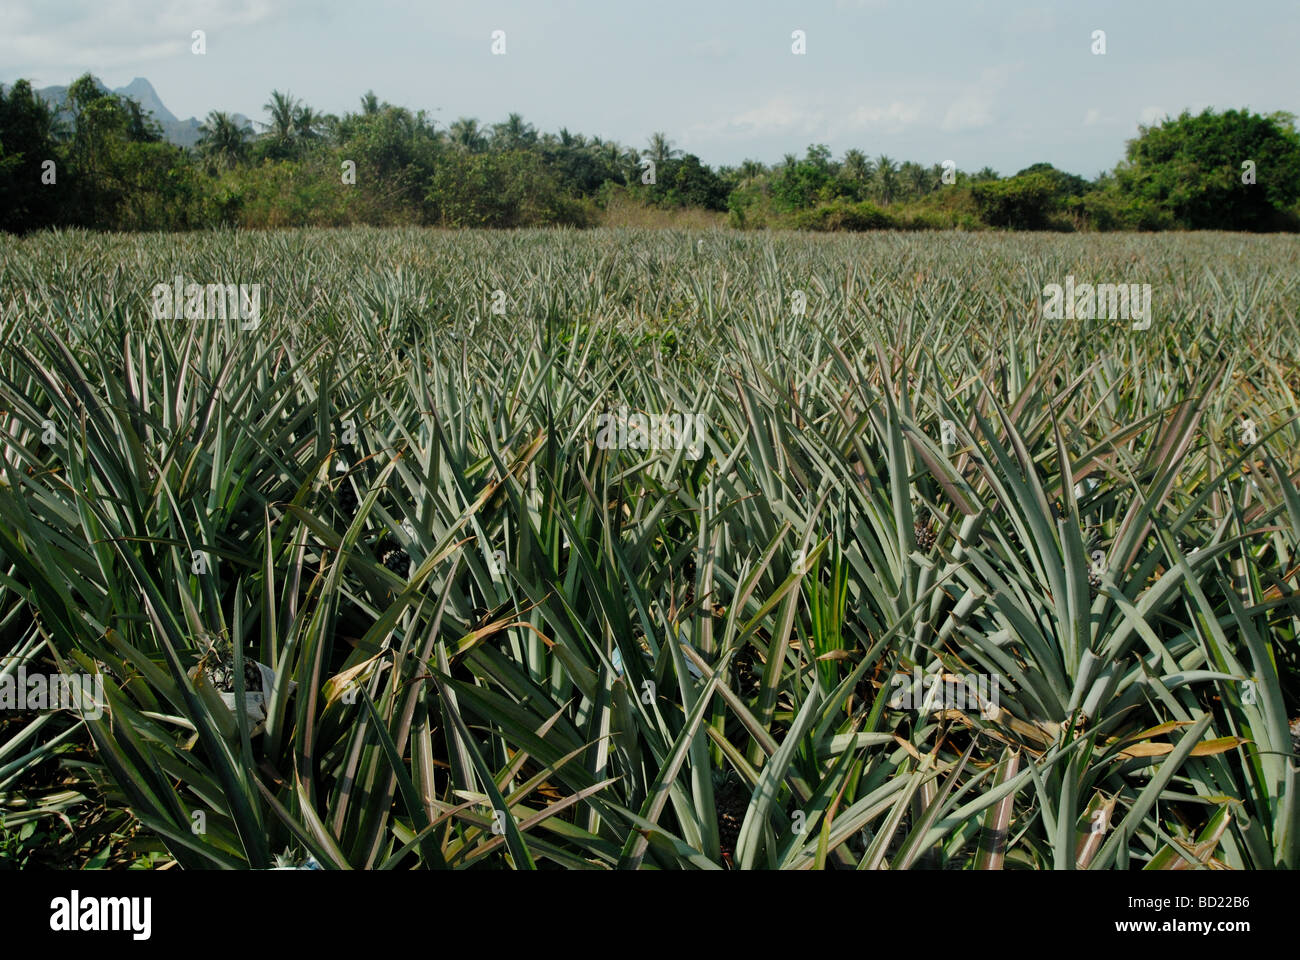 Pineapple (Ananas comosus) field / plantation Stock Photo